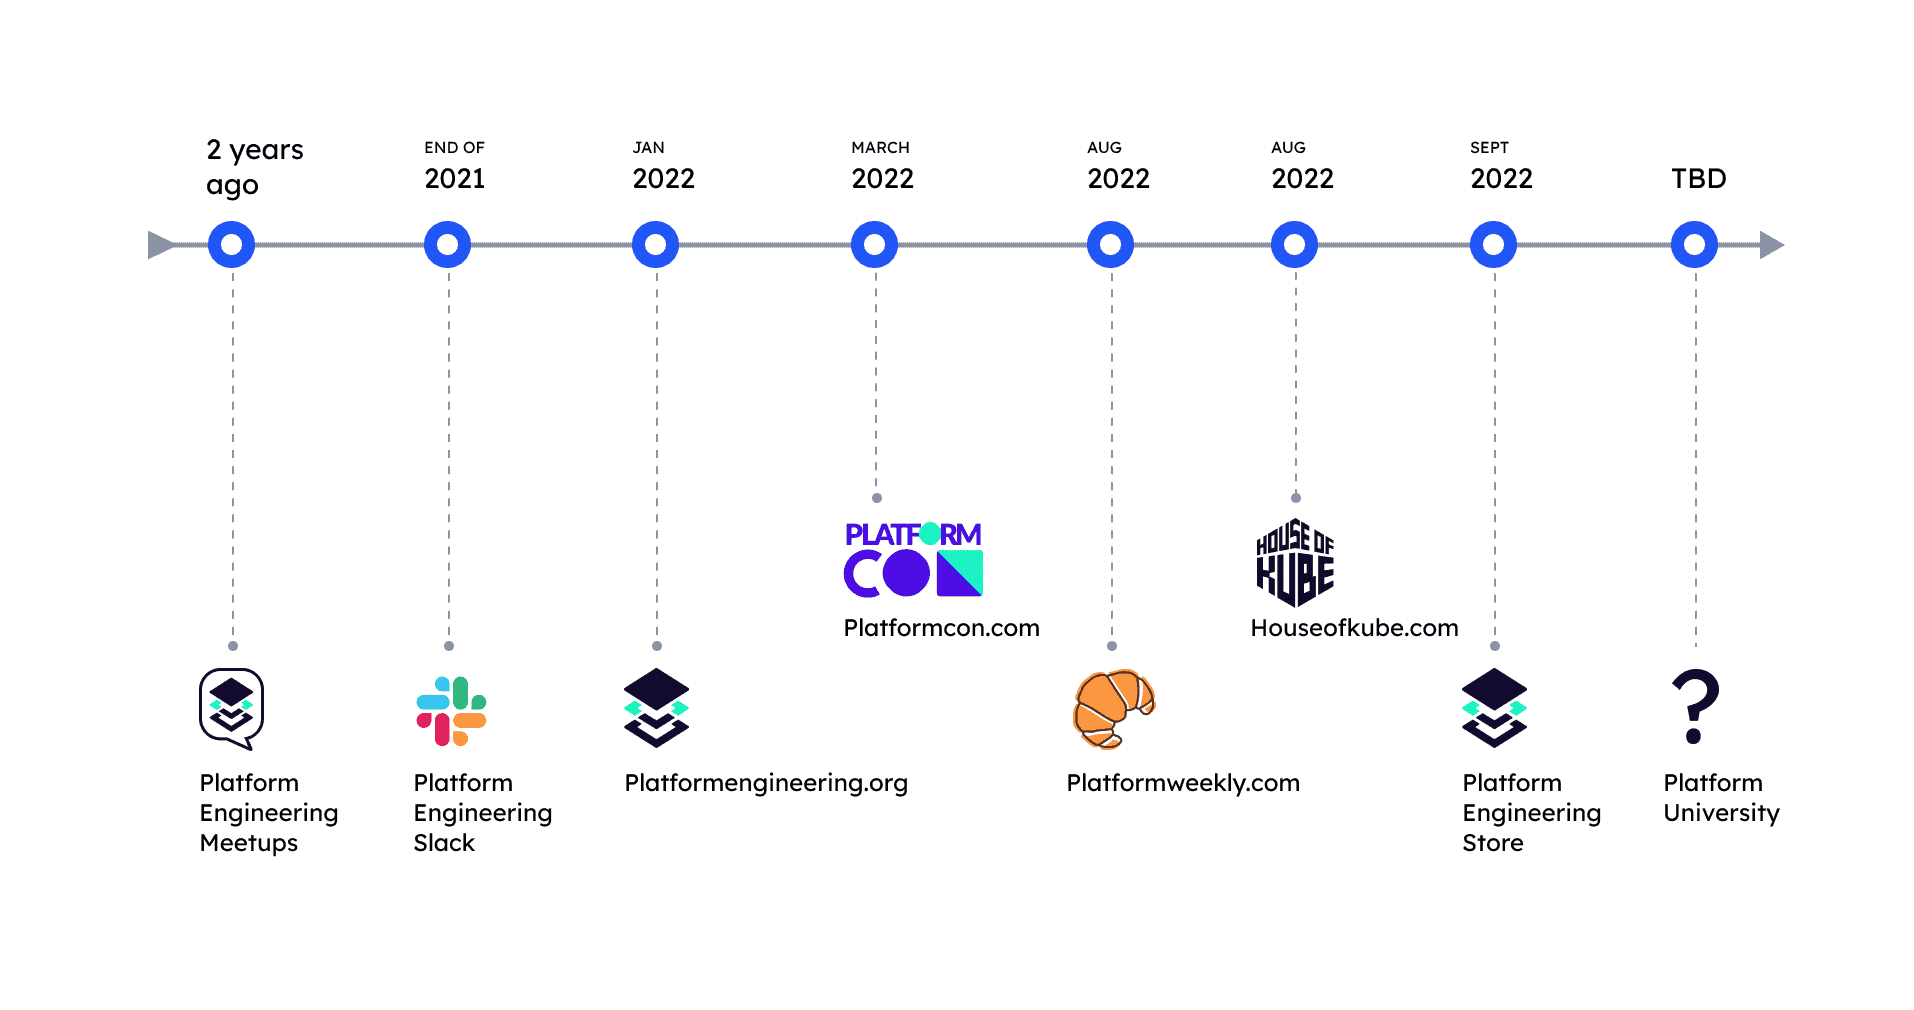 Platform Engineering Community growth timeline